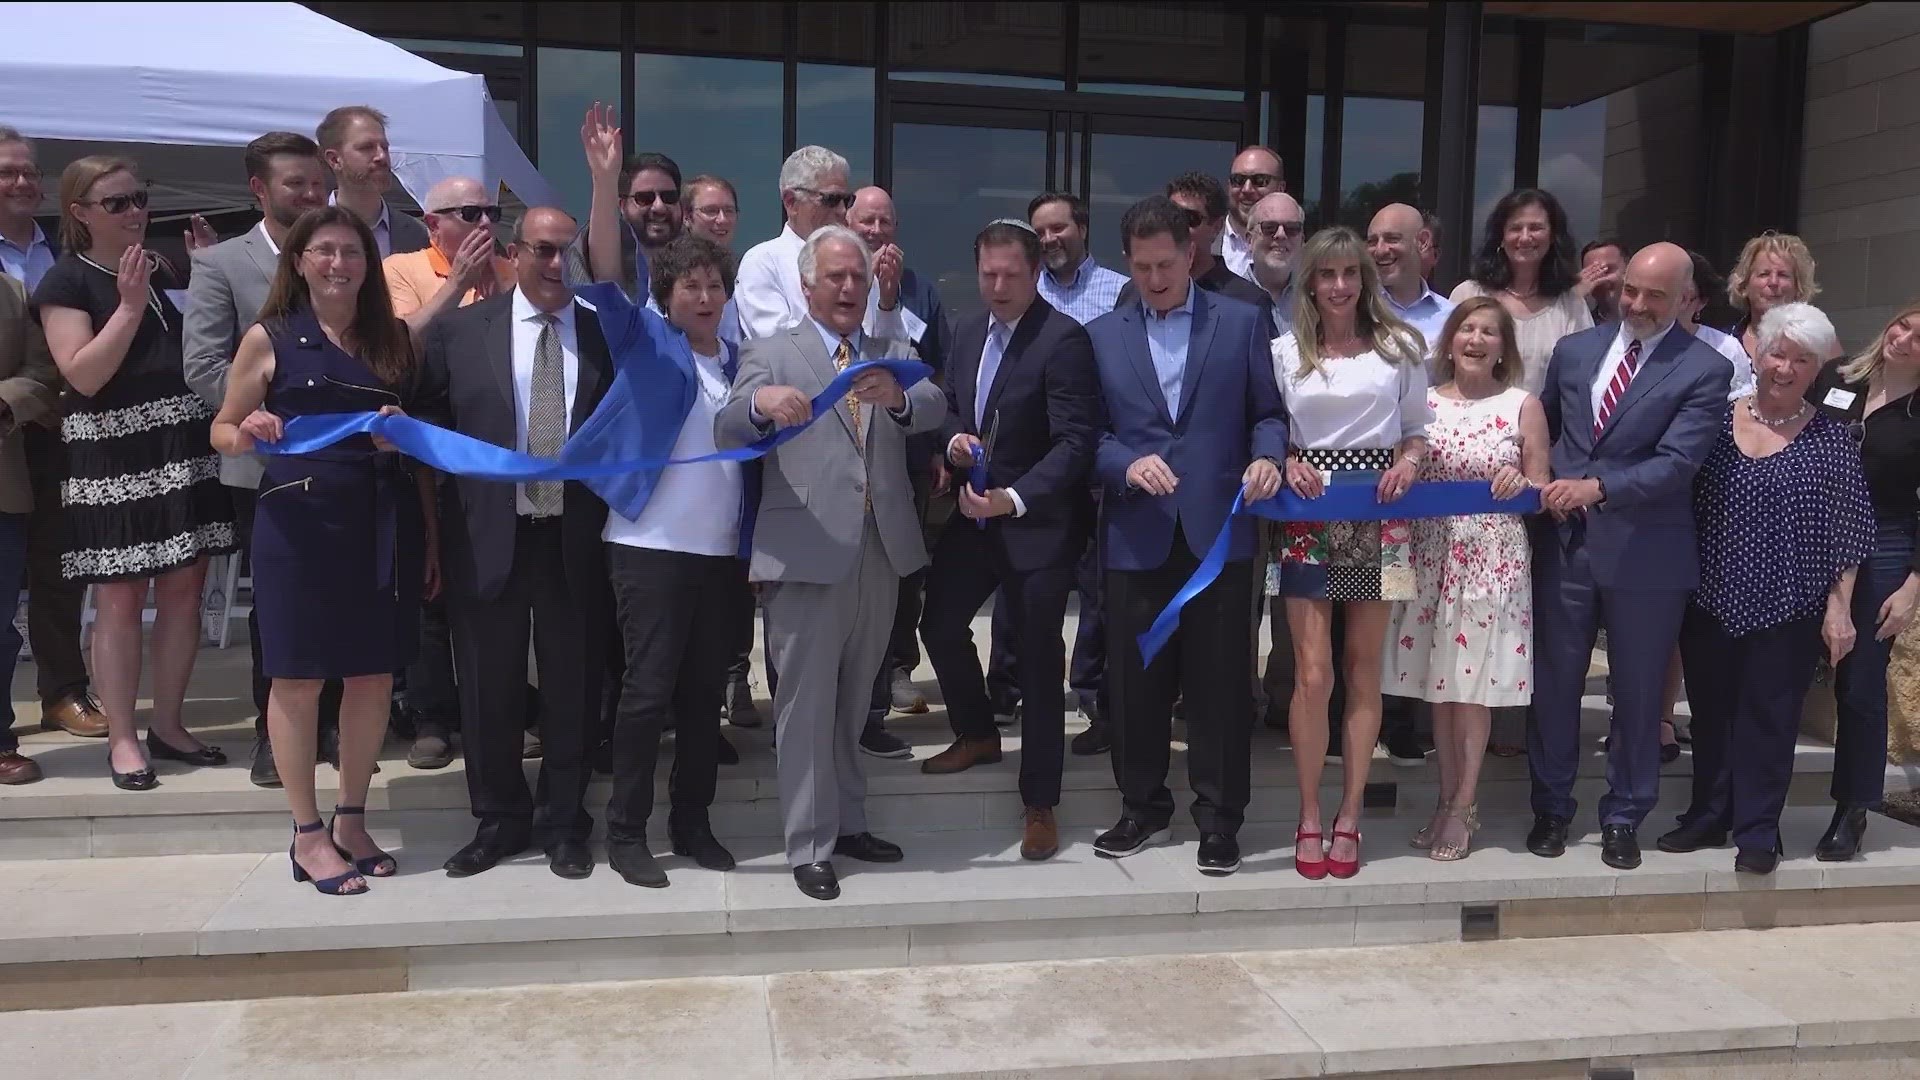 Shalom Austin celebrated the newly renovated and expanded Jewish community center.